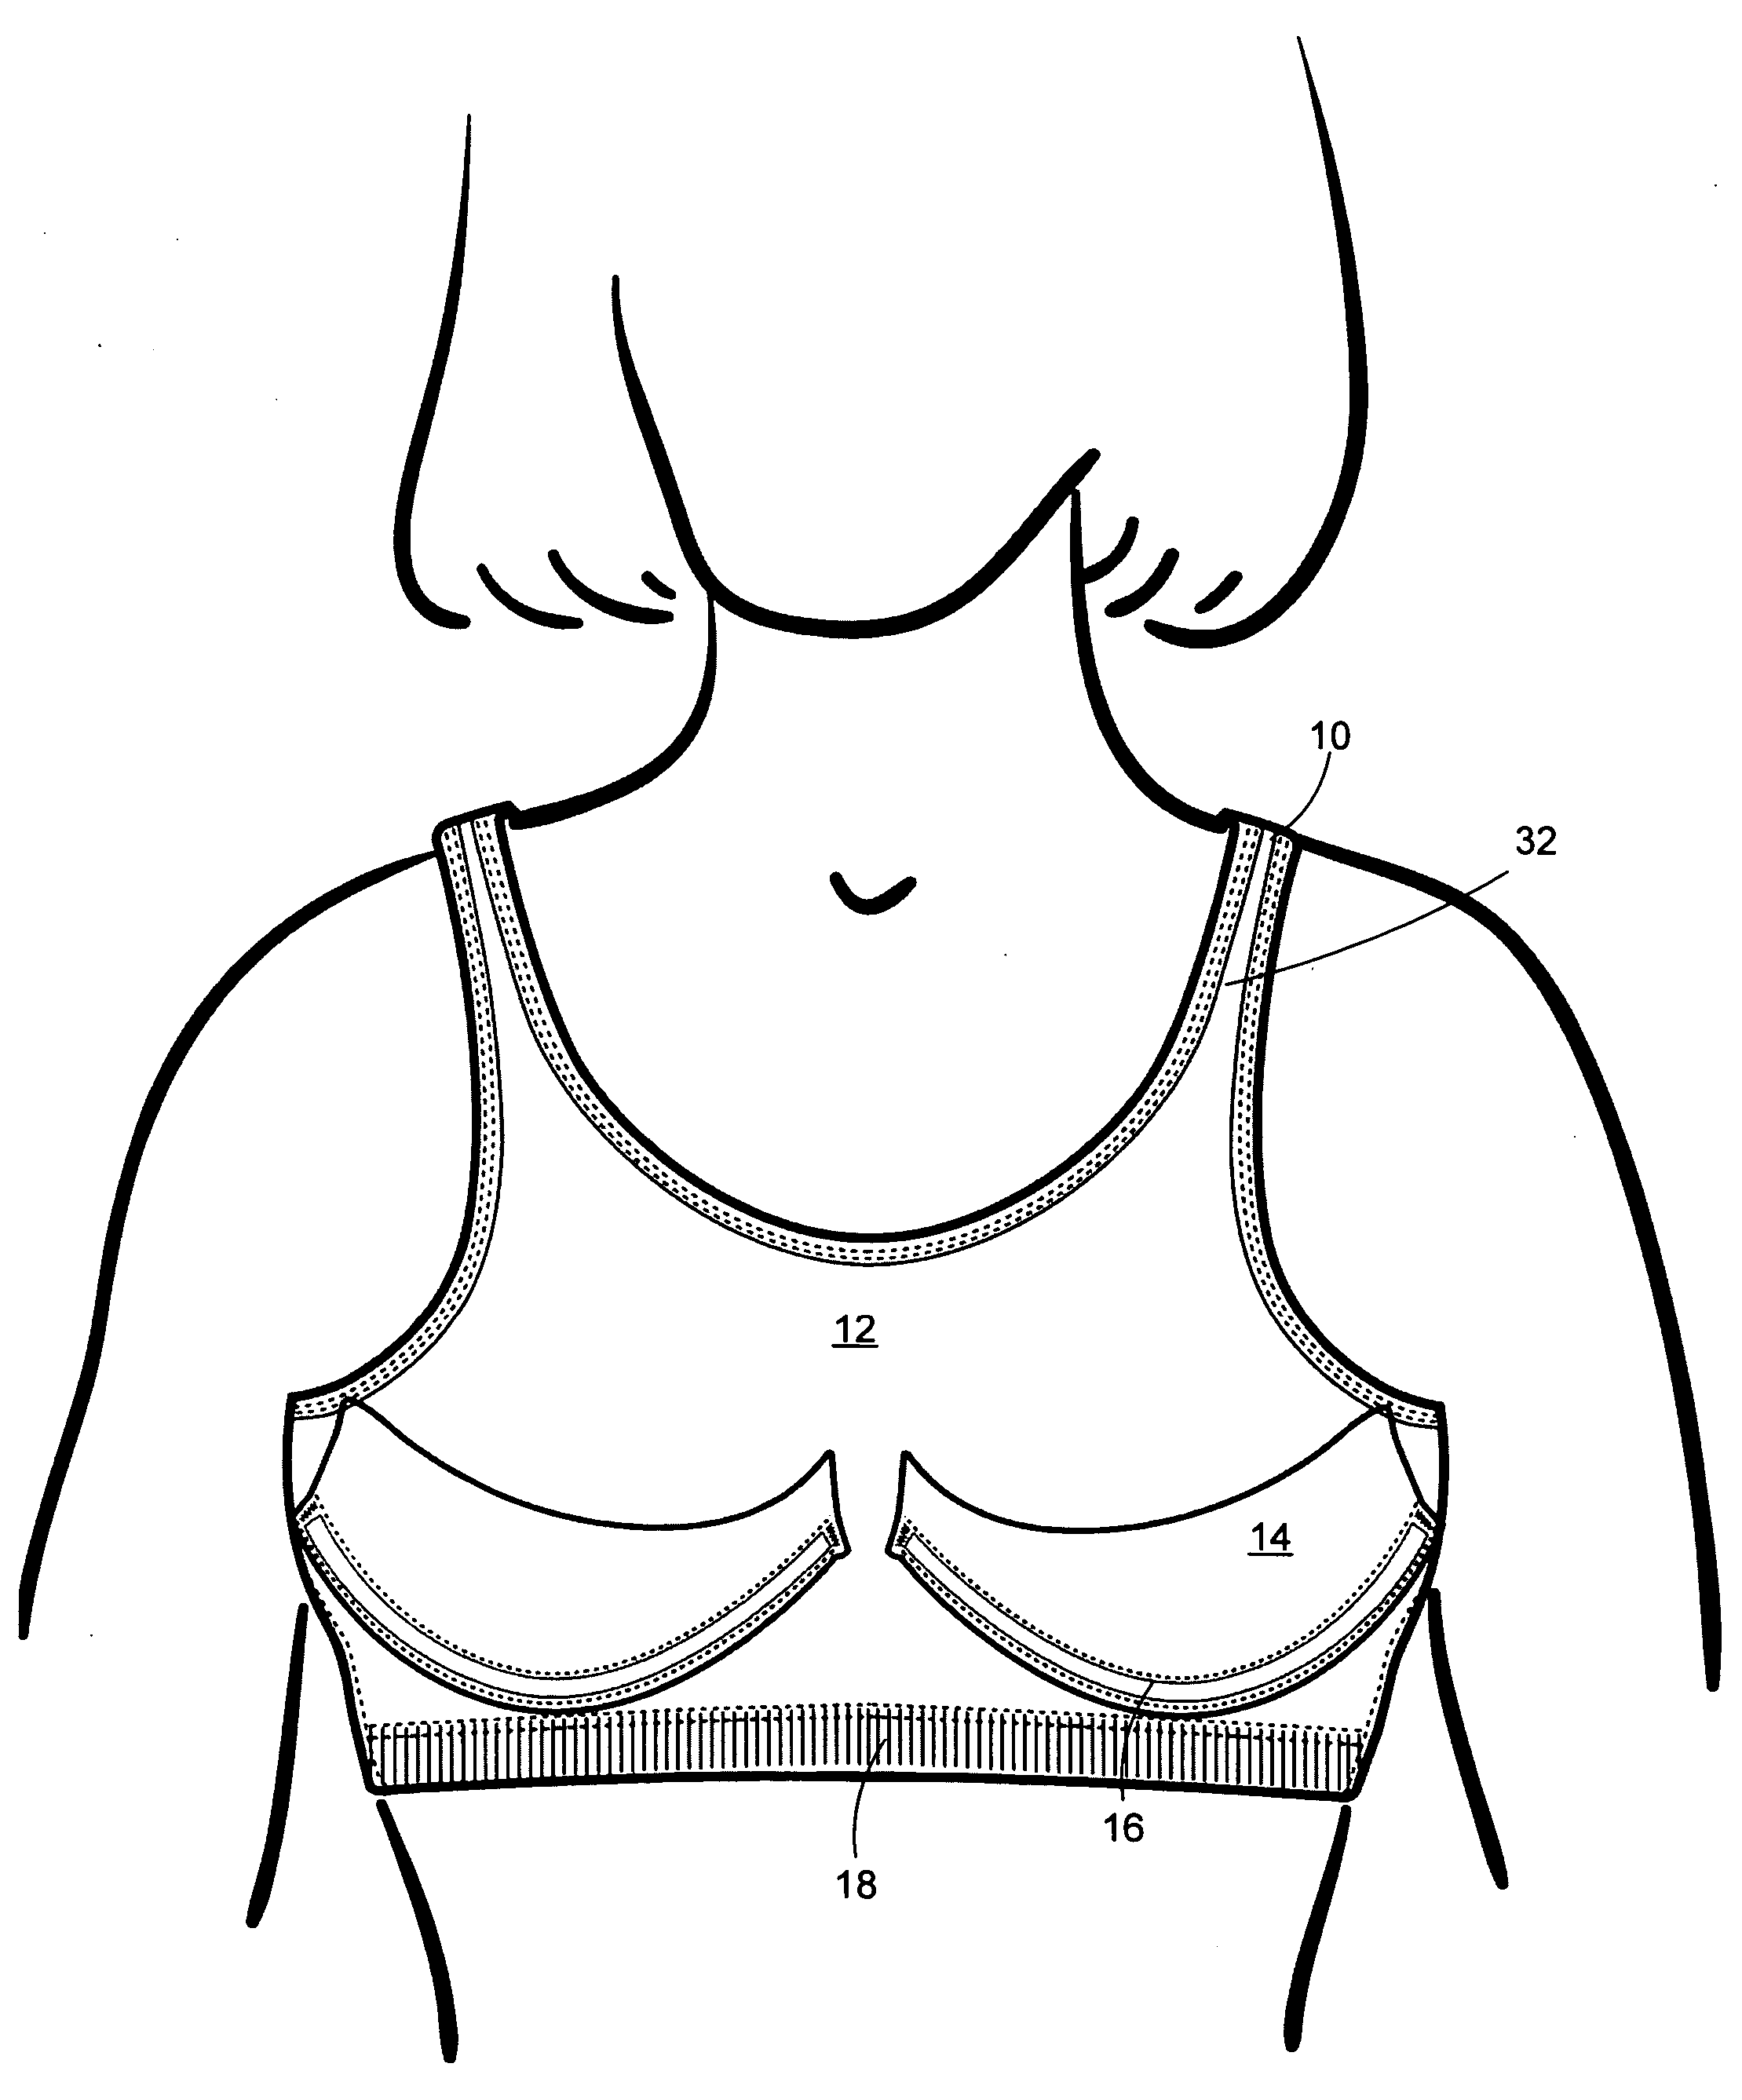 Push-up sports bra